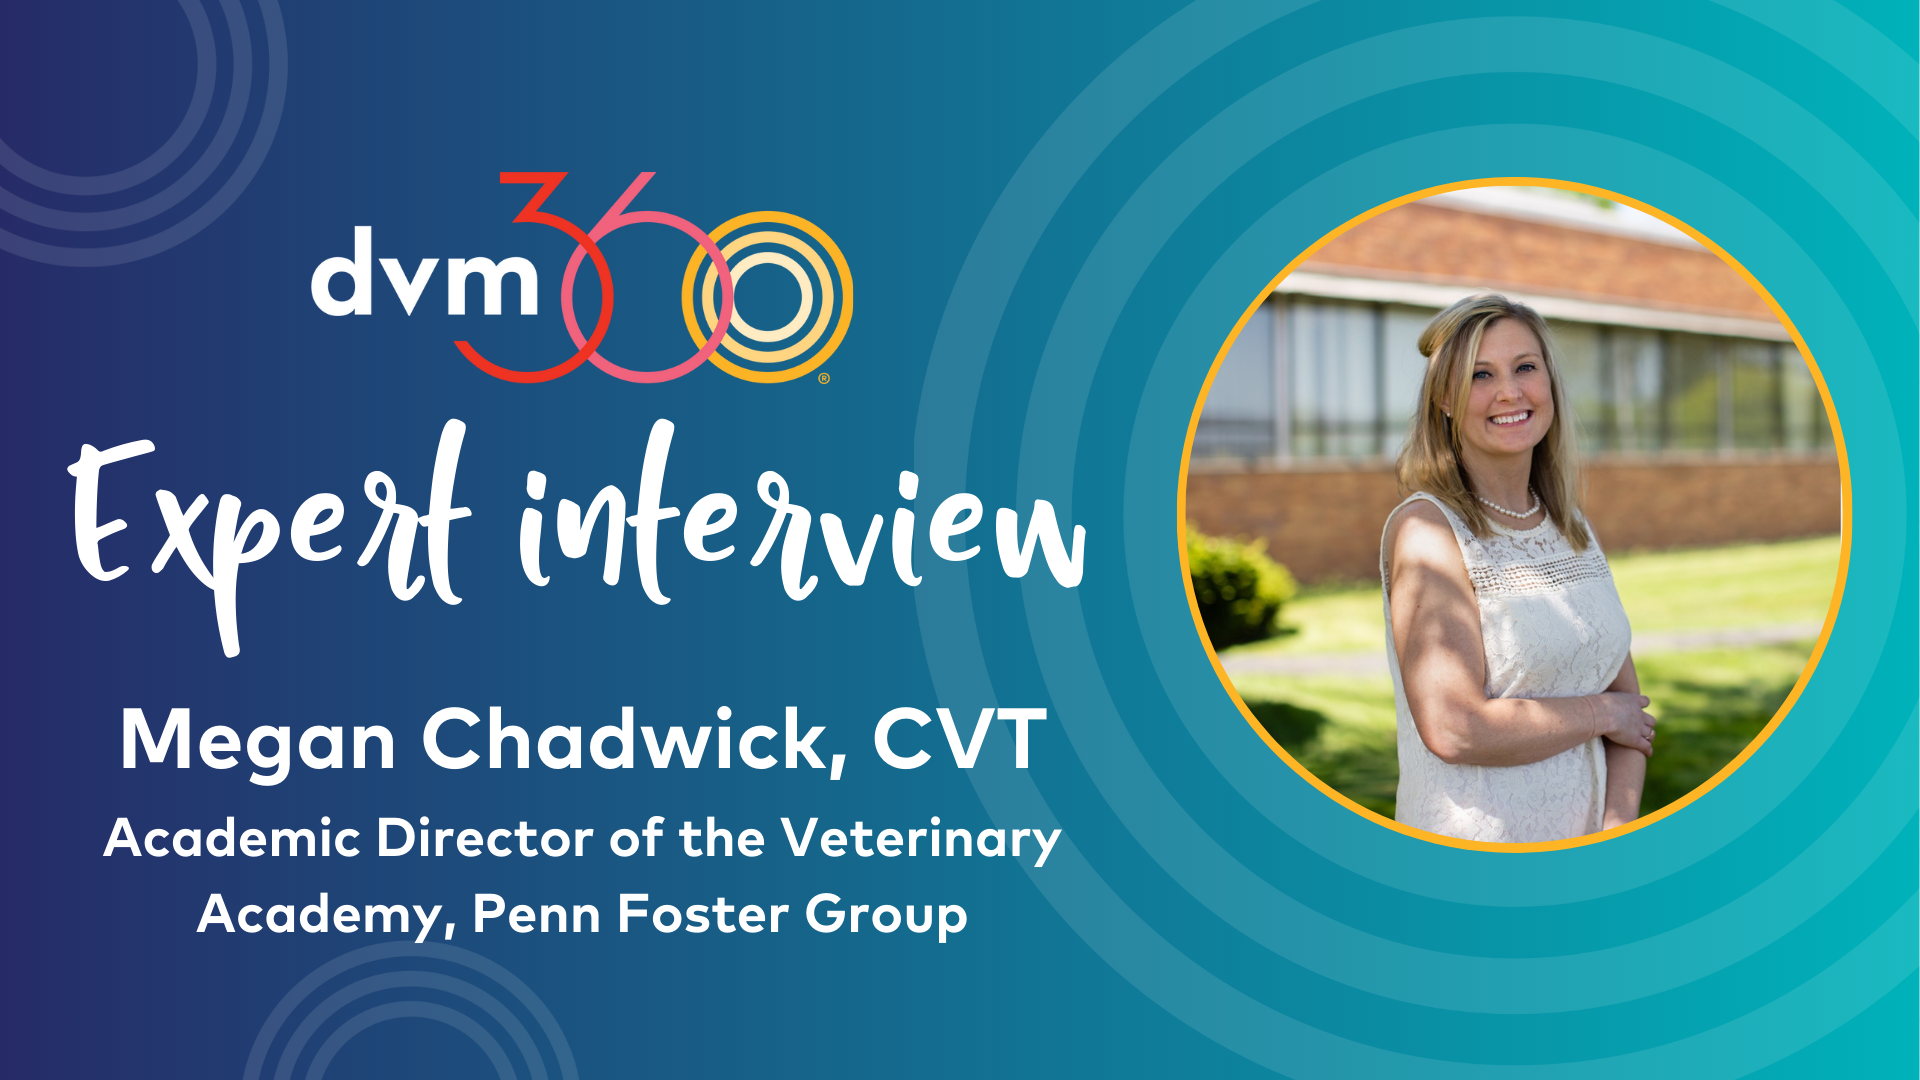 Q&A with Megan Chadwick, CVT